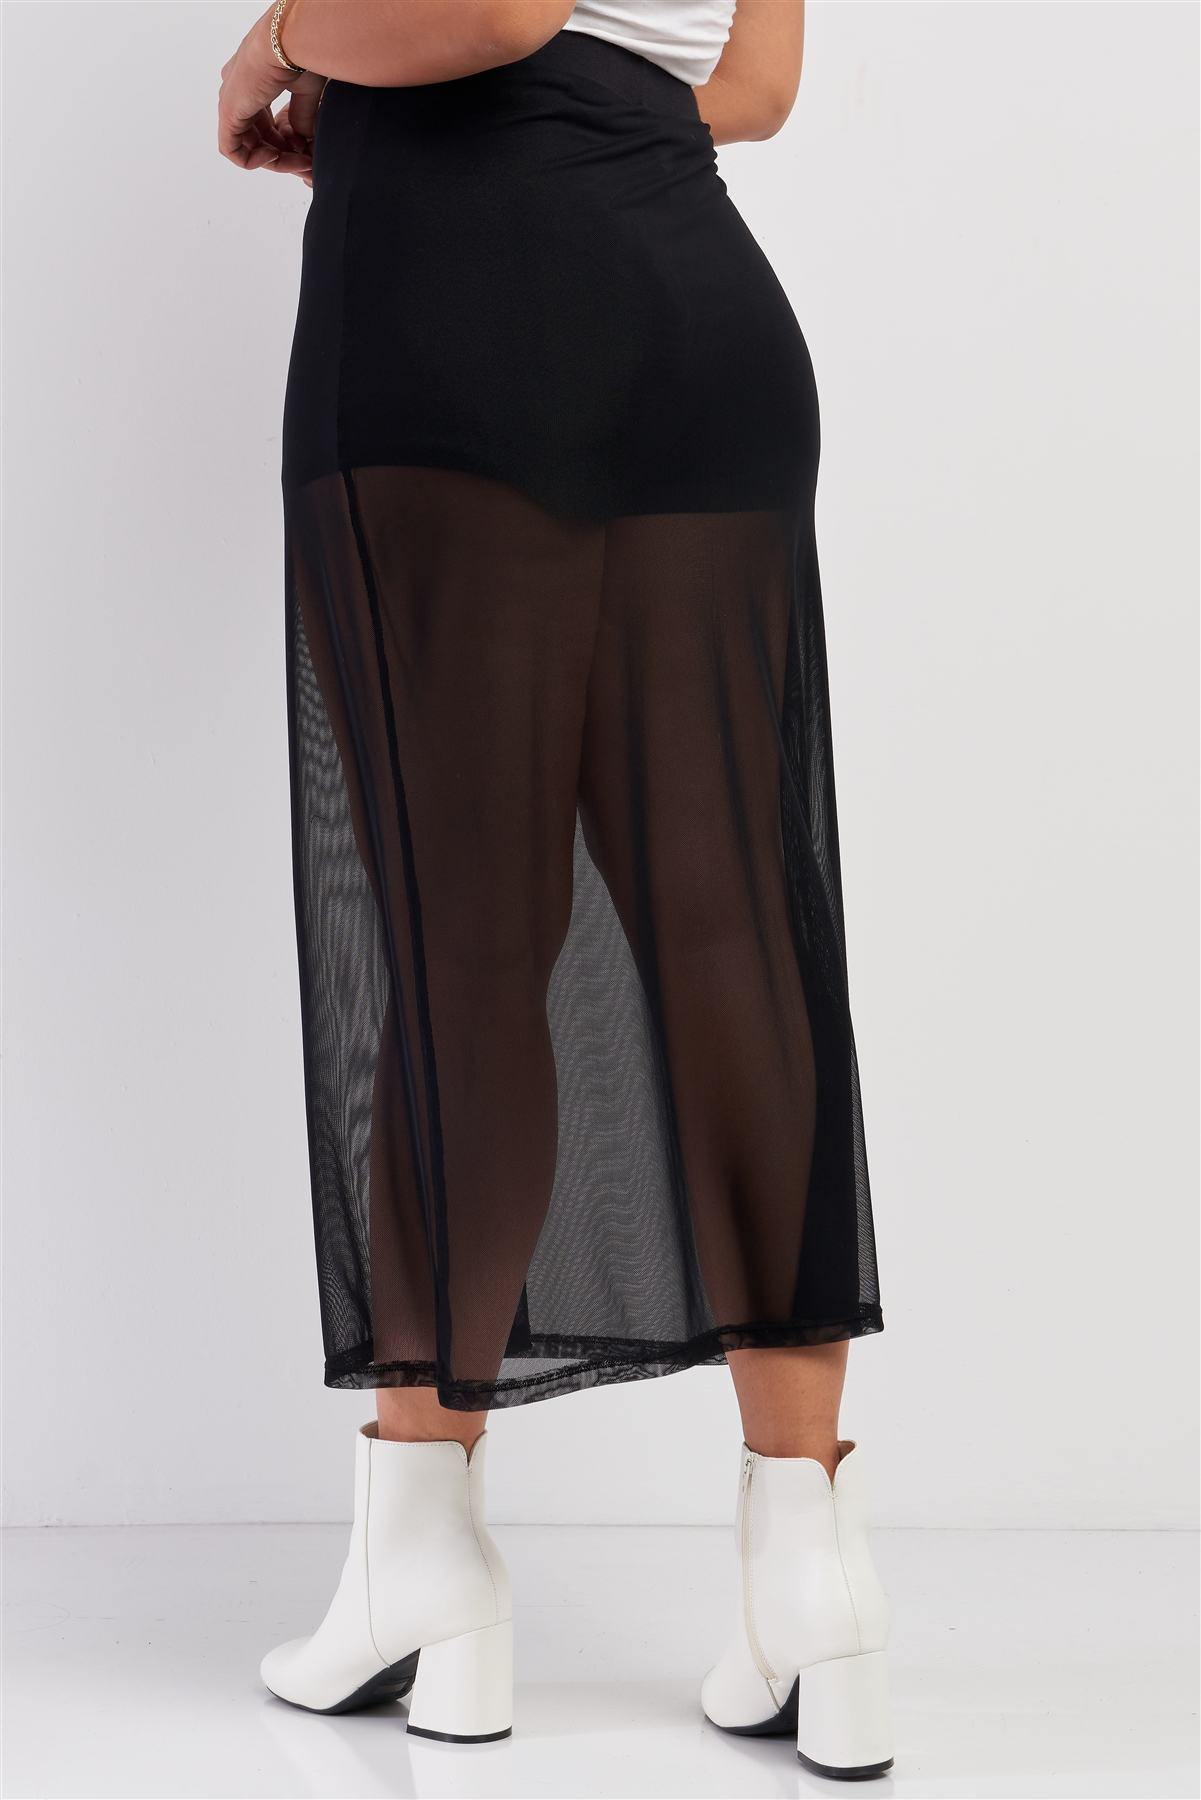 Plus Black High Waisted Sheer Mesh Underskirt Midi Skirt - Pearlara